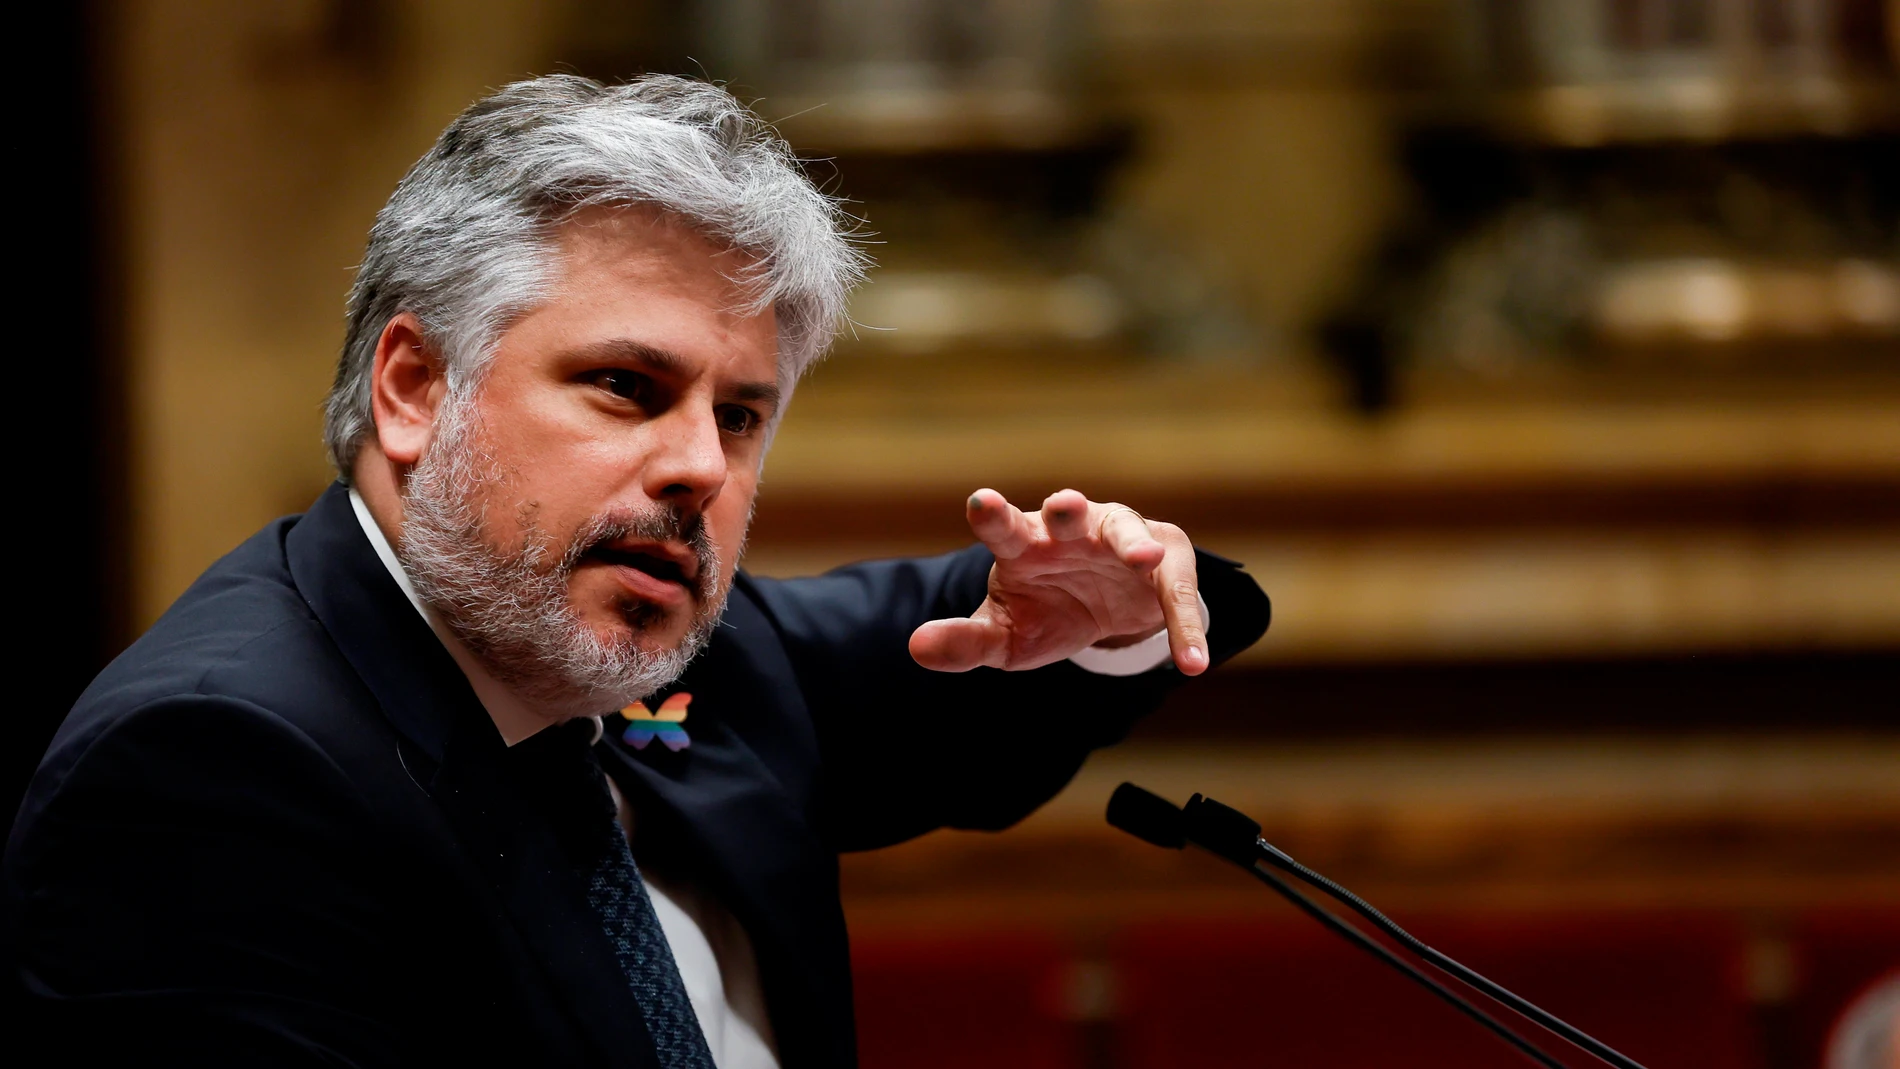 El portavoz de JxCat, Albert Batet, responde al presidente de la Generalitat, Pere Aragonès, tras su comparecencia ante el pleno del Parlament